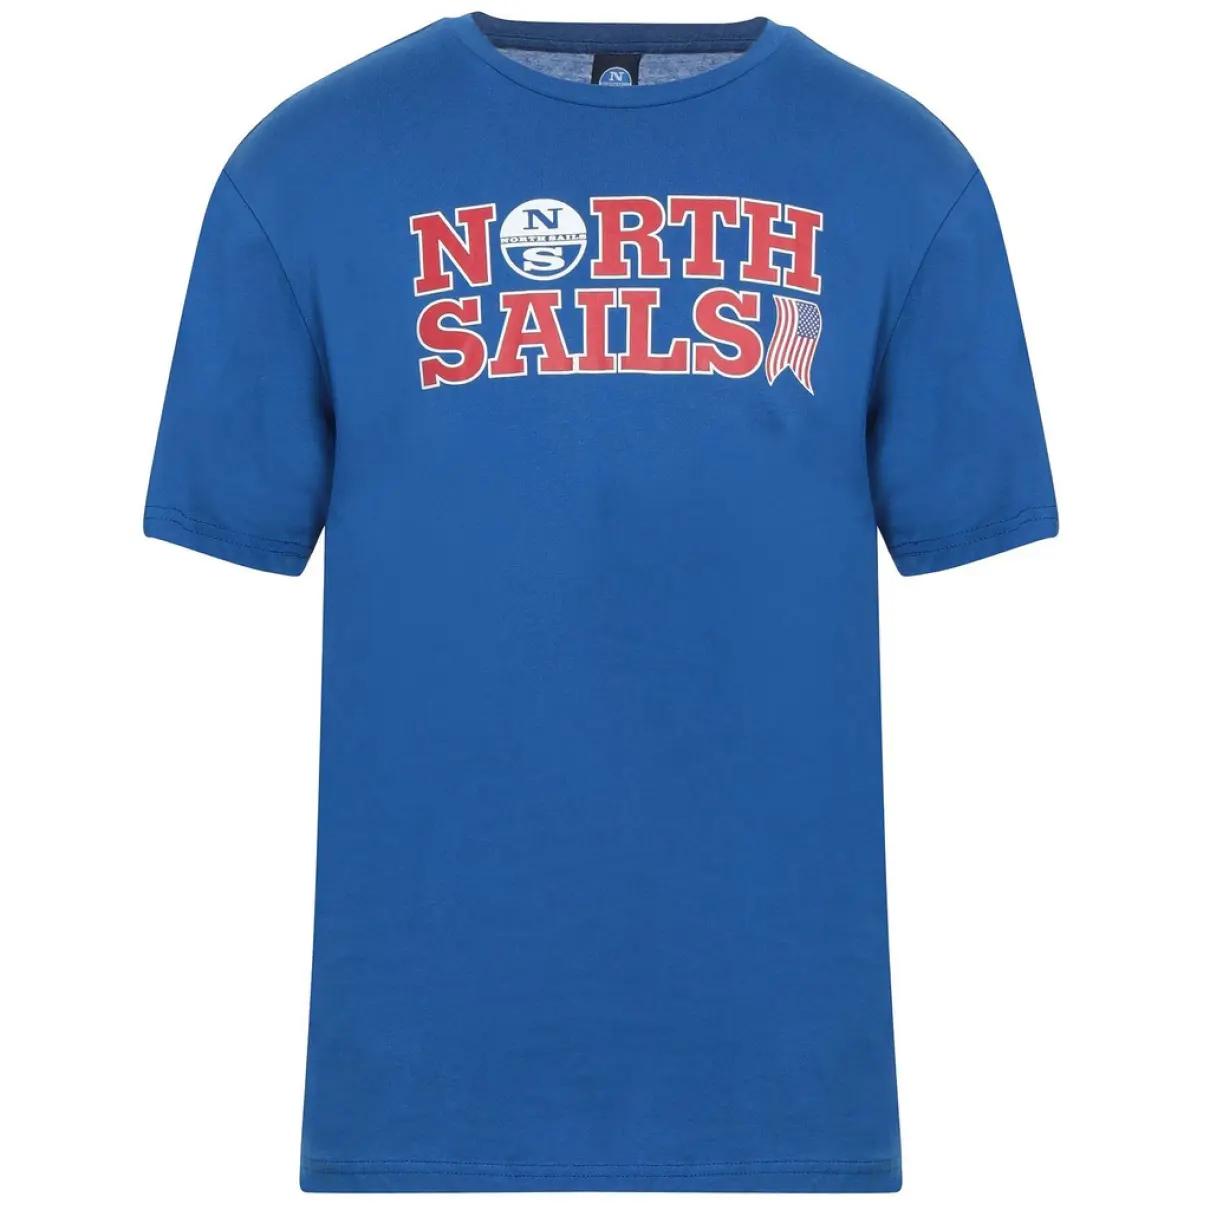 Buy North Sails T-shirt online